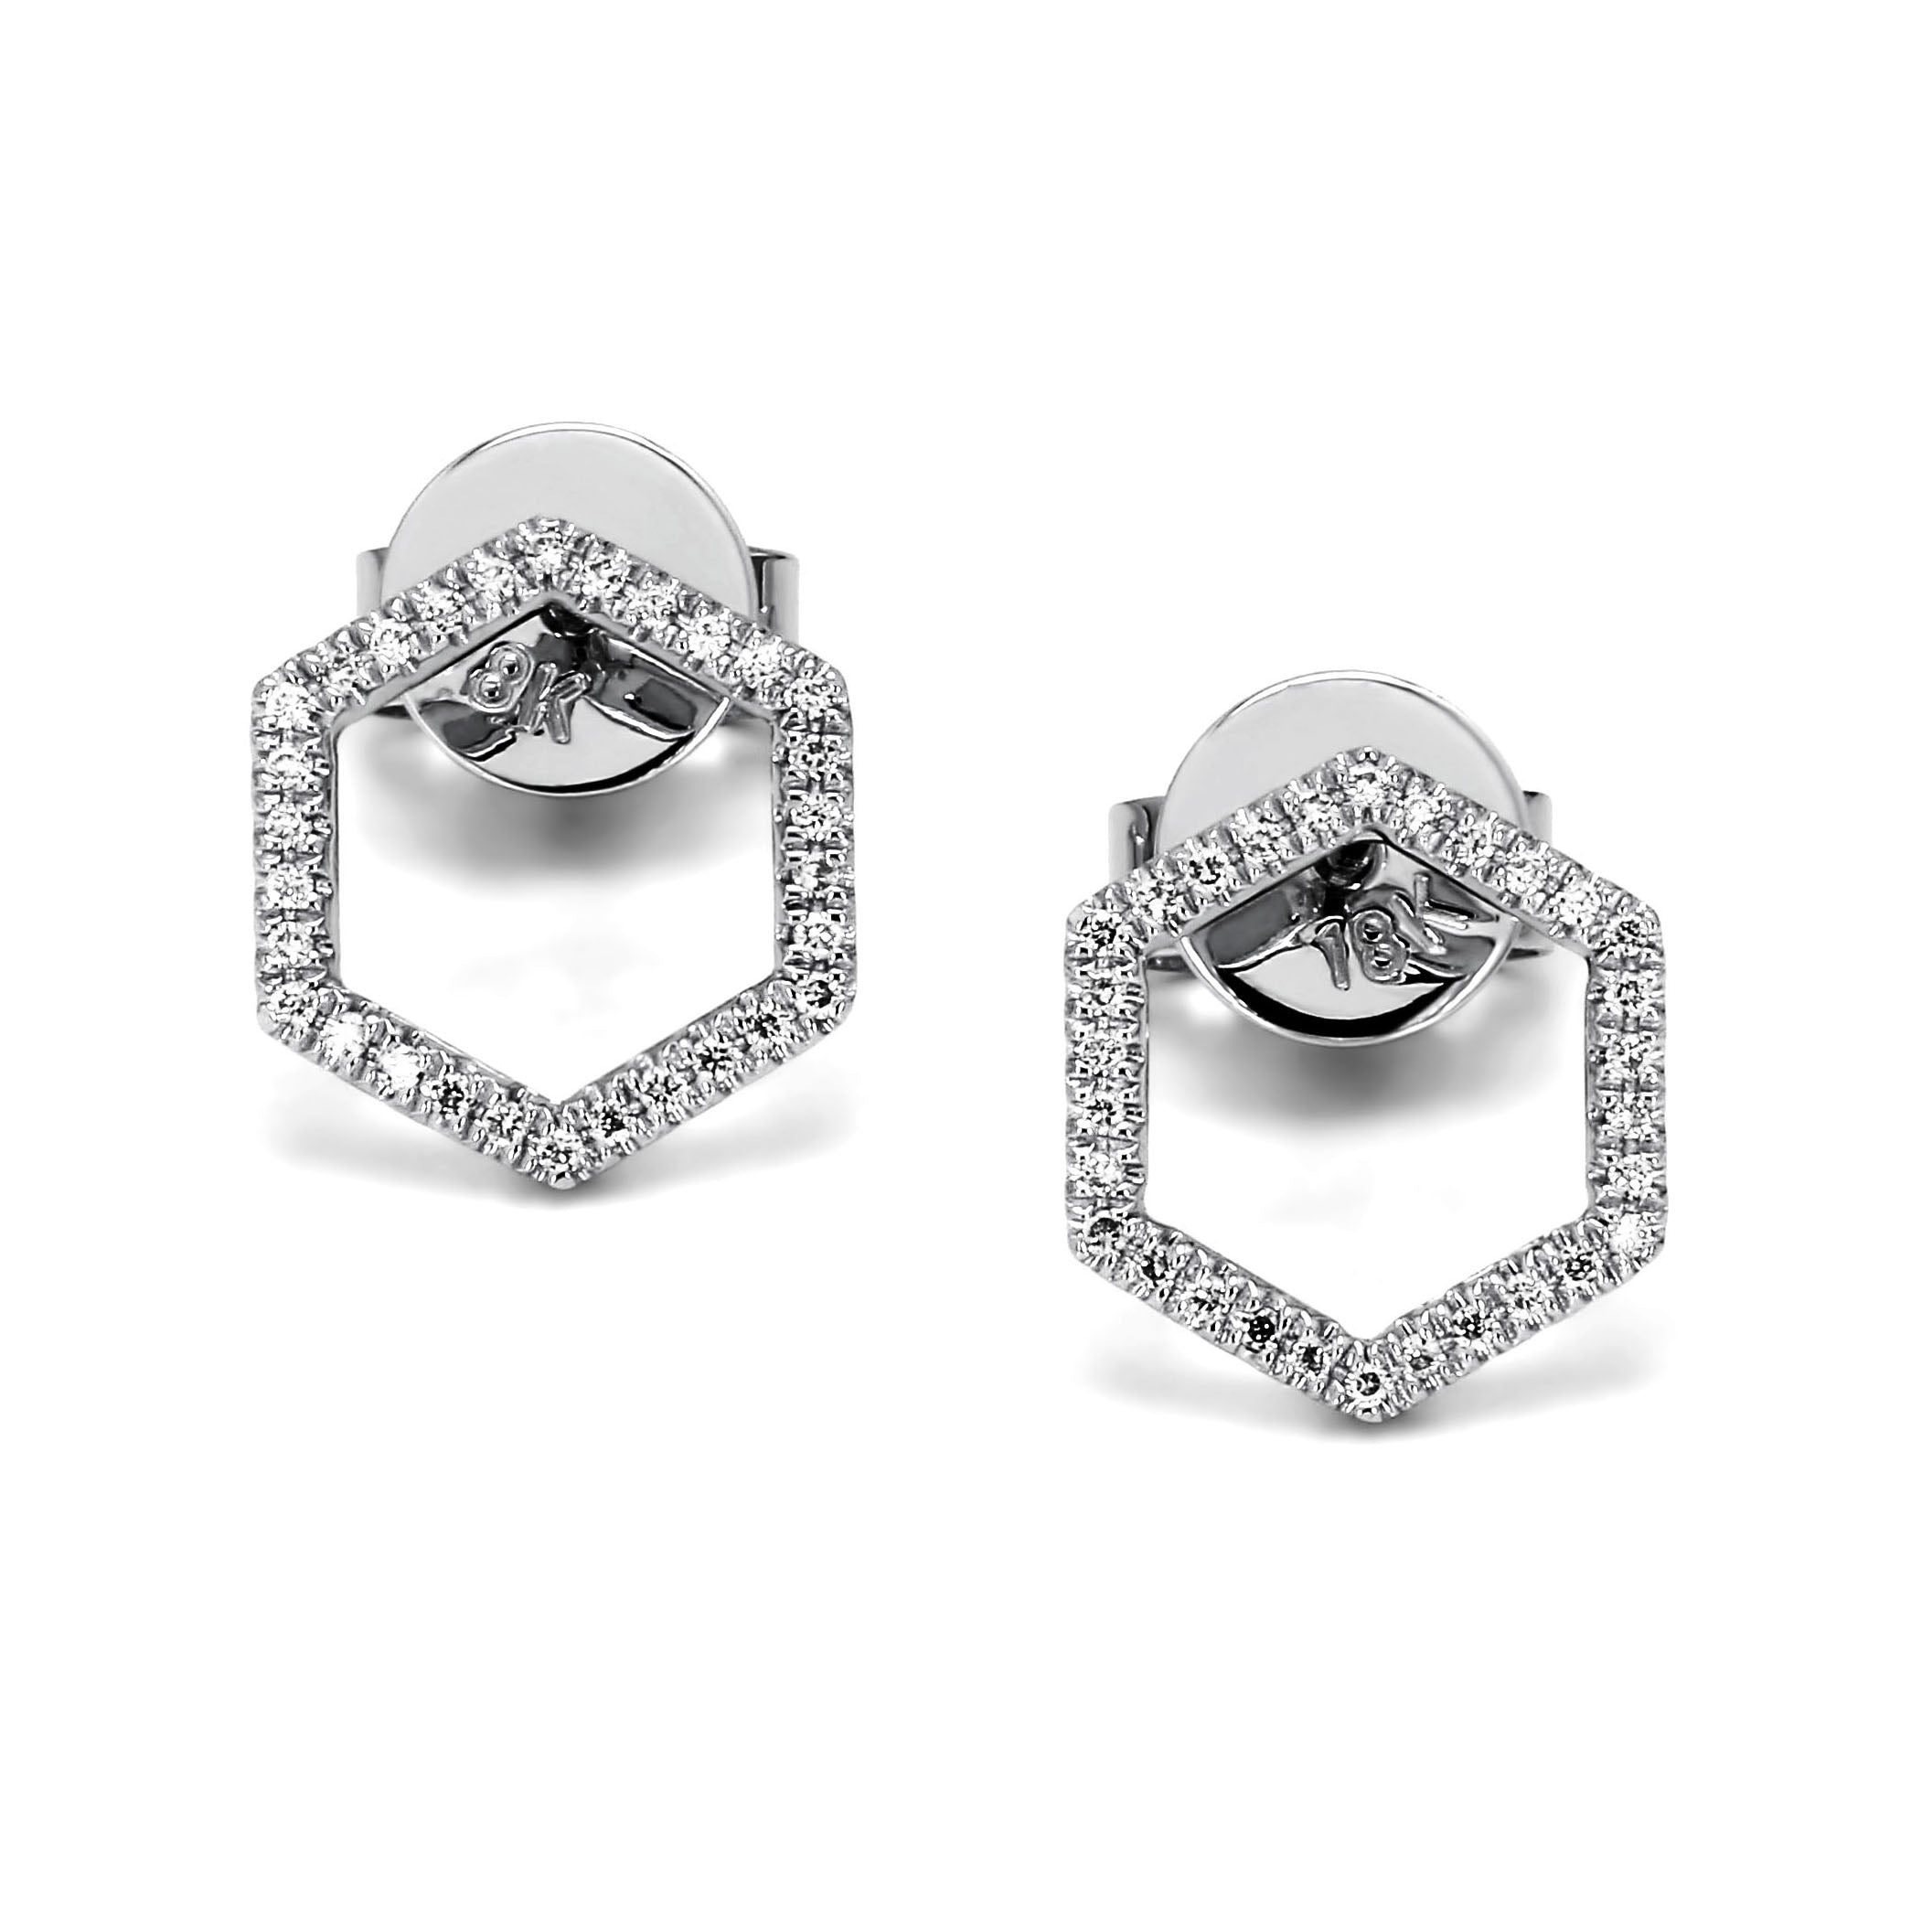 Adamar Jewels LUZ Nube Earrings in 18K white gold set with diamonds